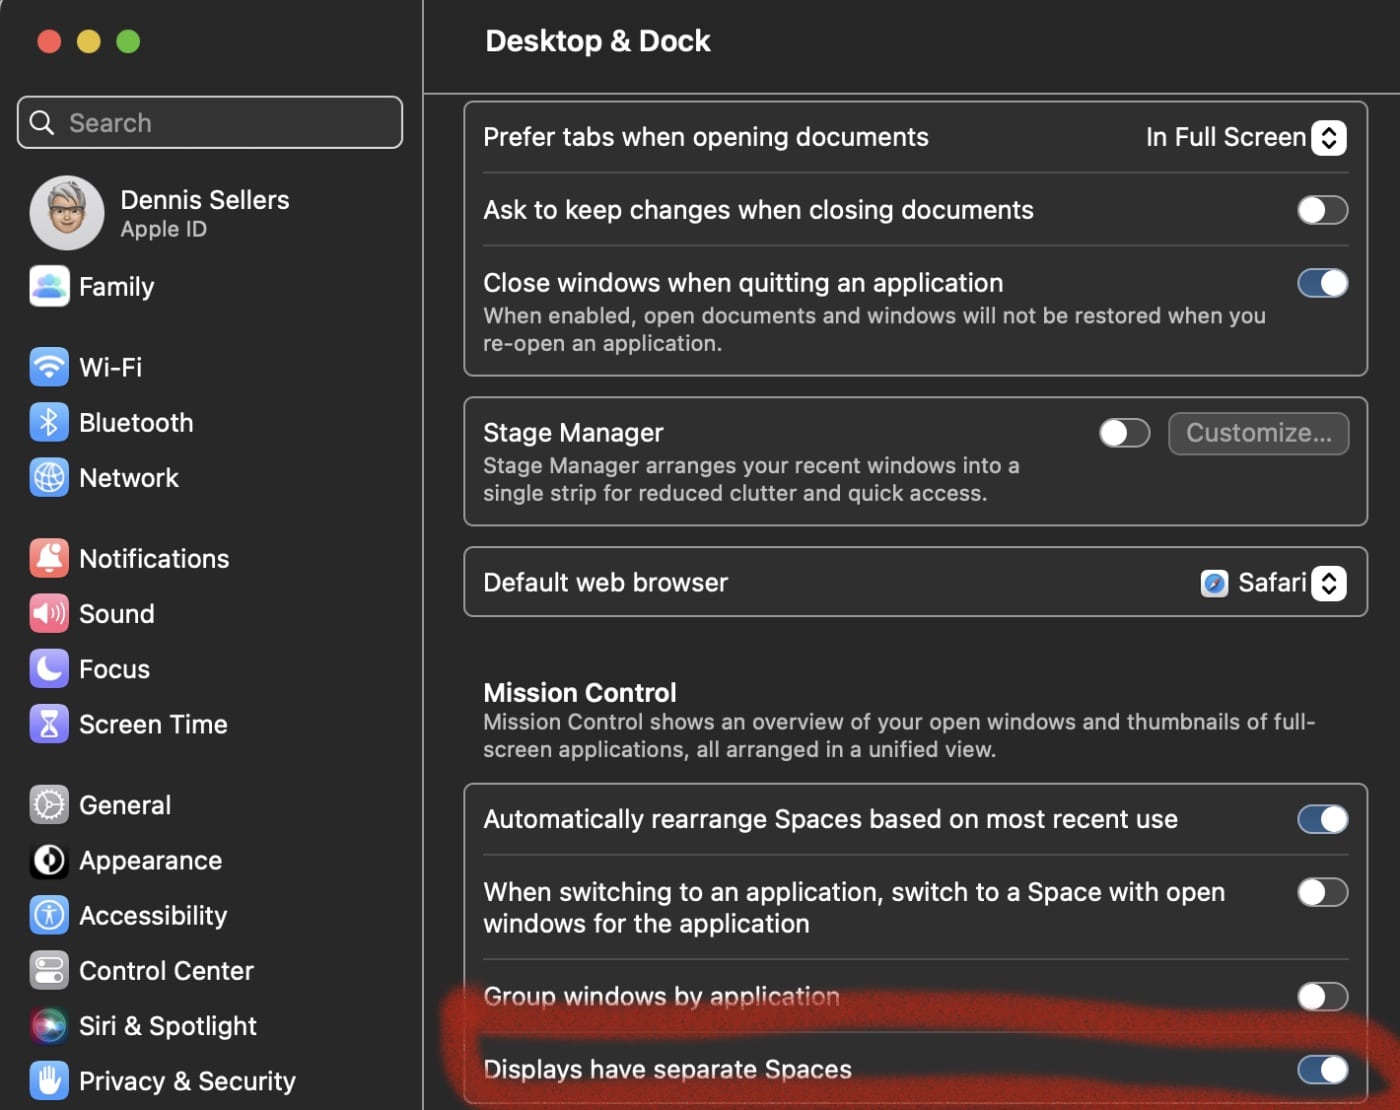 Desktop & Dock > Stage Manager > Customize